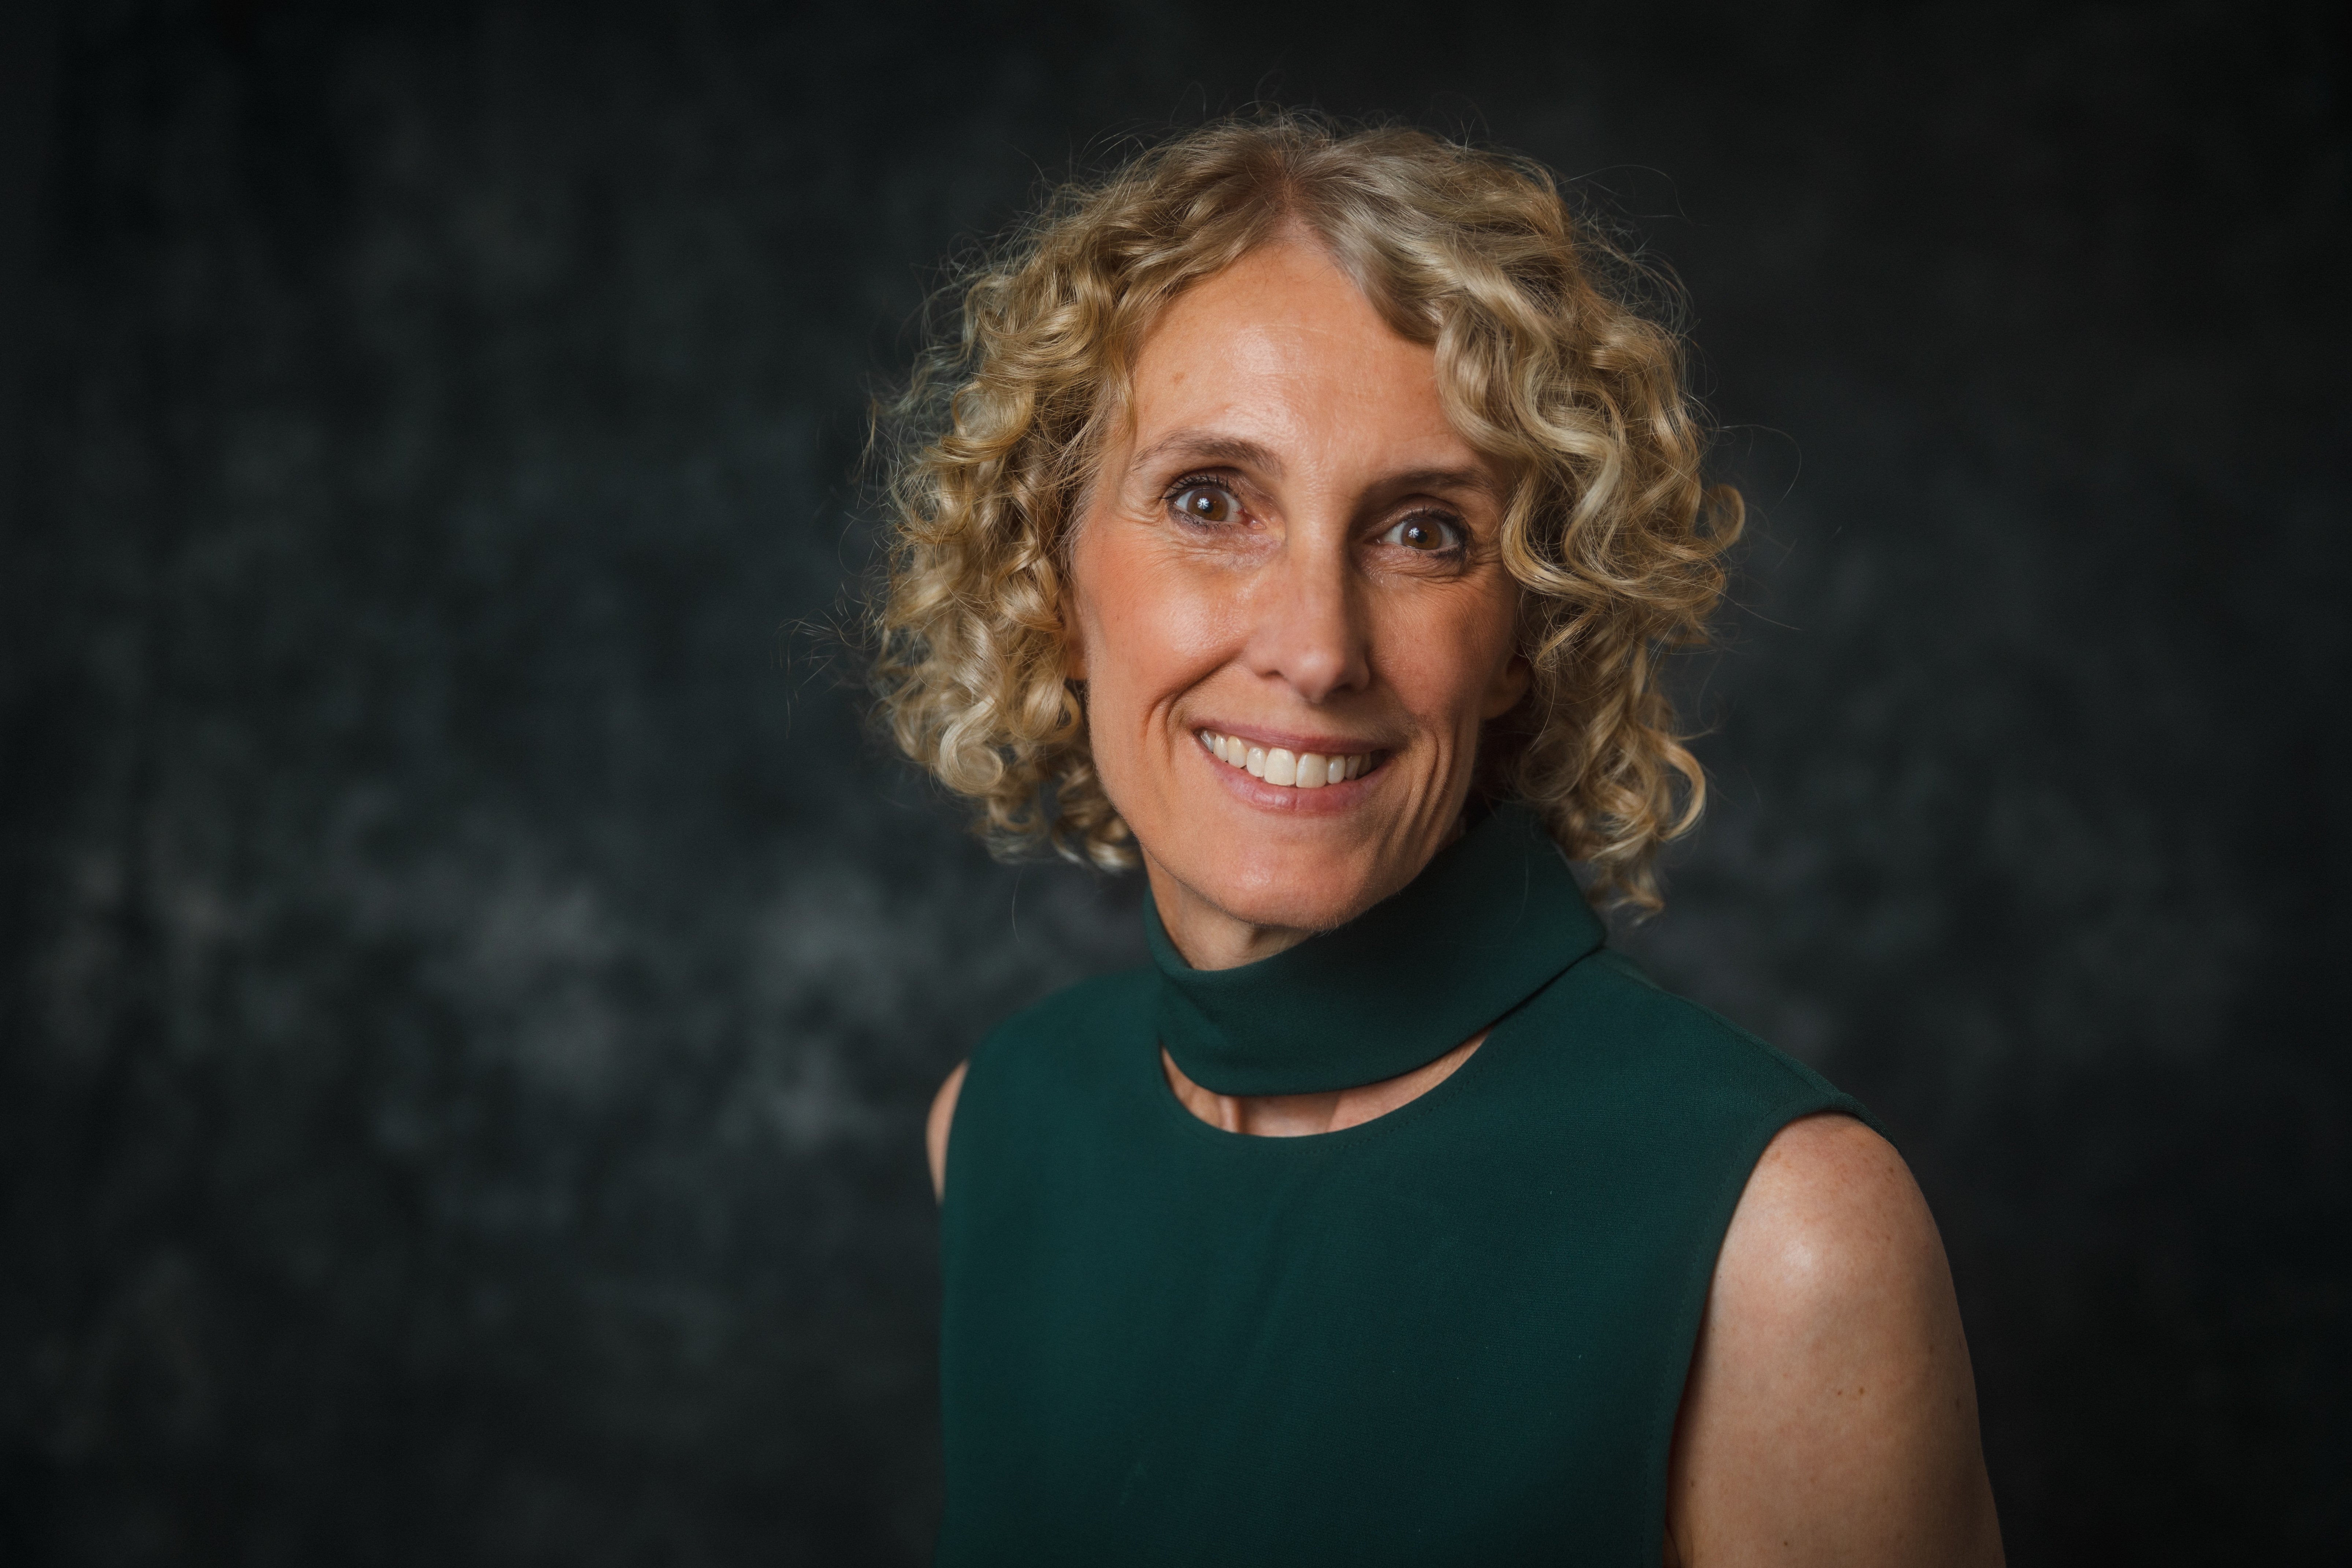 Chroma Medicine CEO Catherine Stehman-Breen